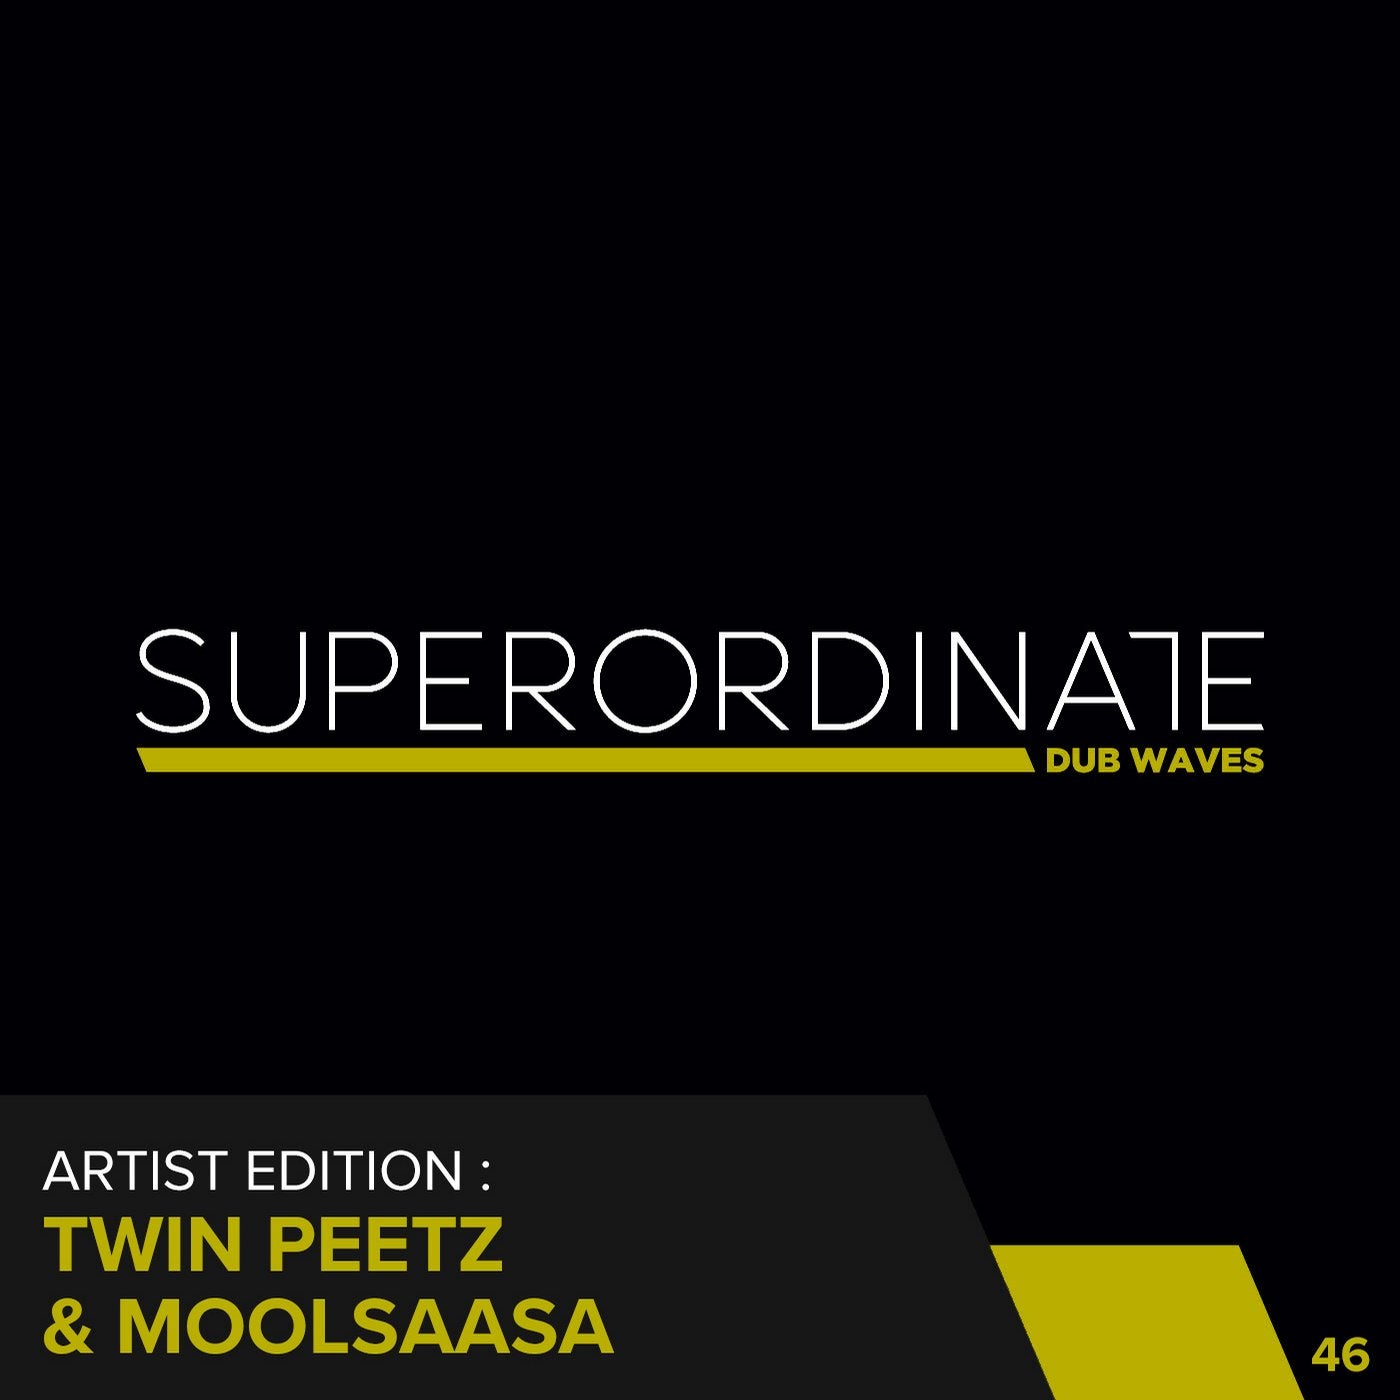 Artist Edition : Twin Peetz & Moolsaasa